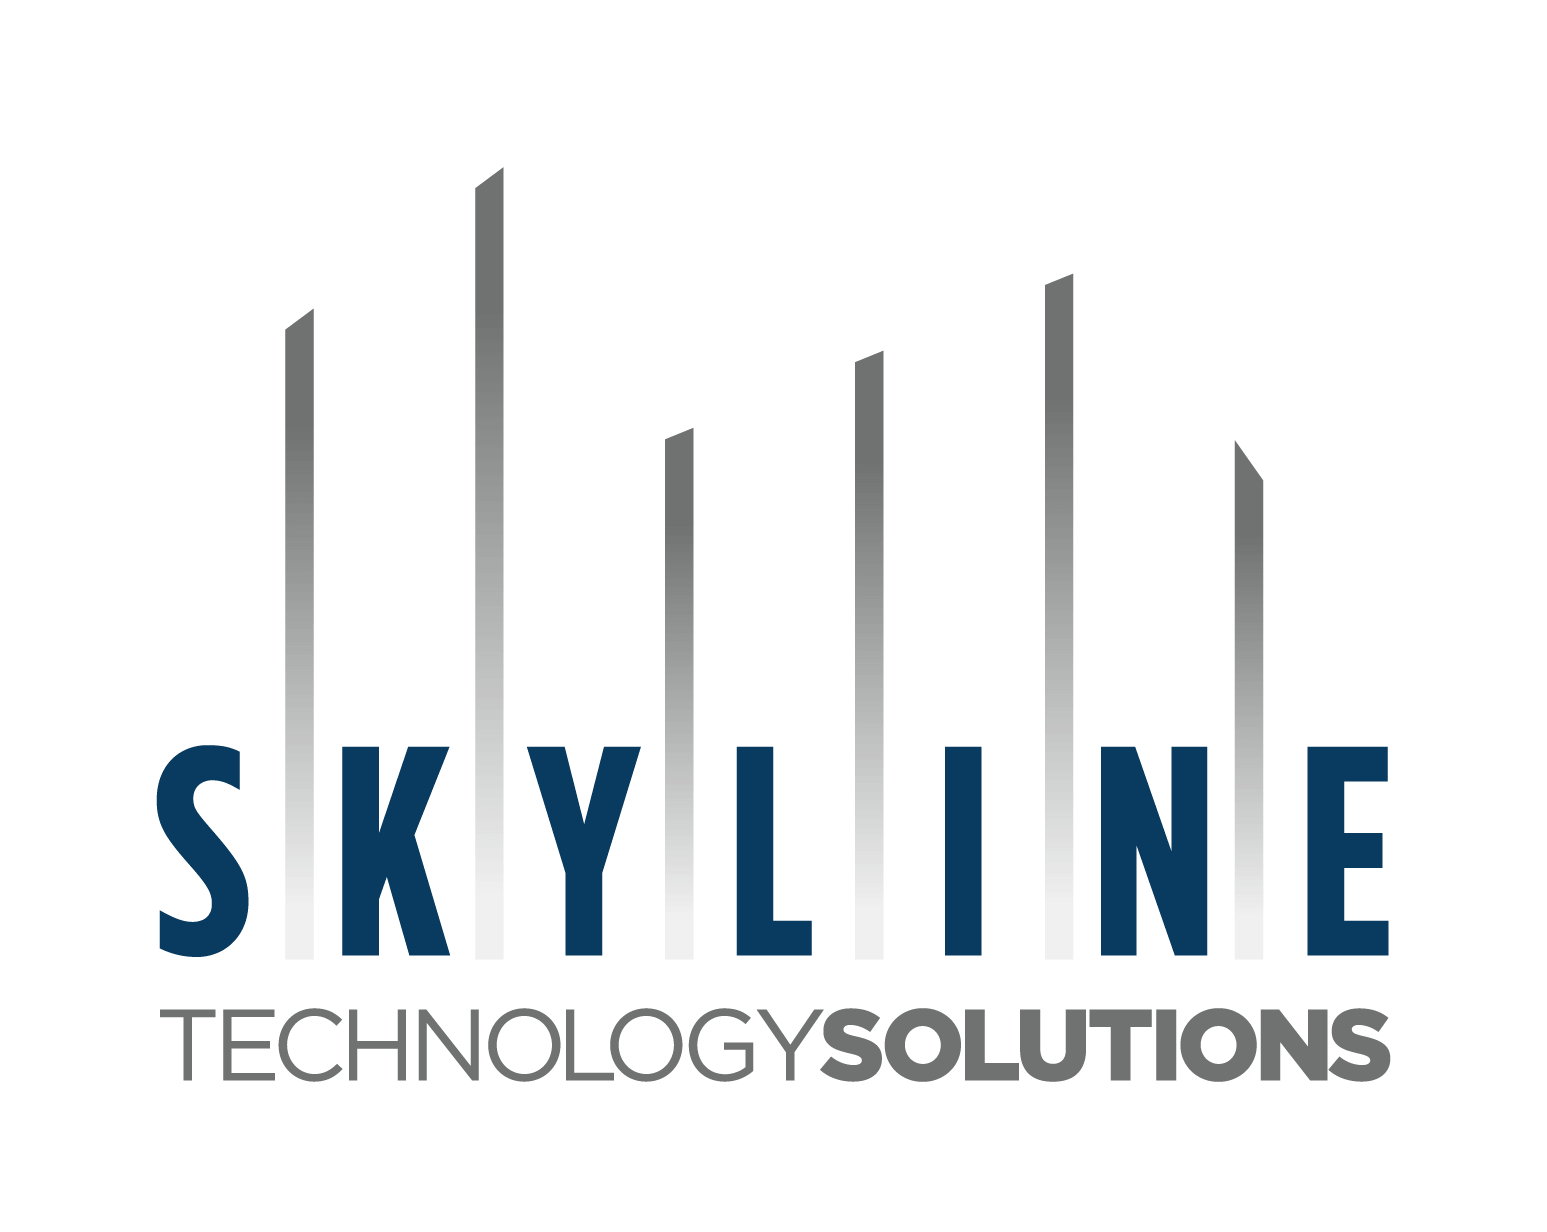 Skyline Technology Solutions logo